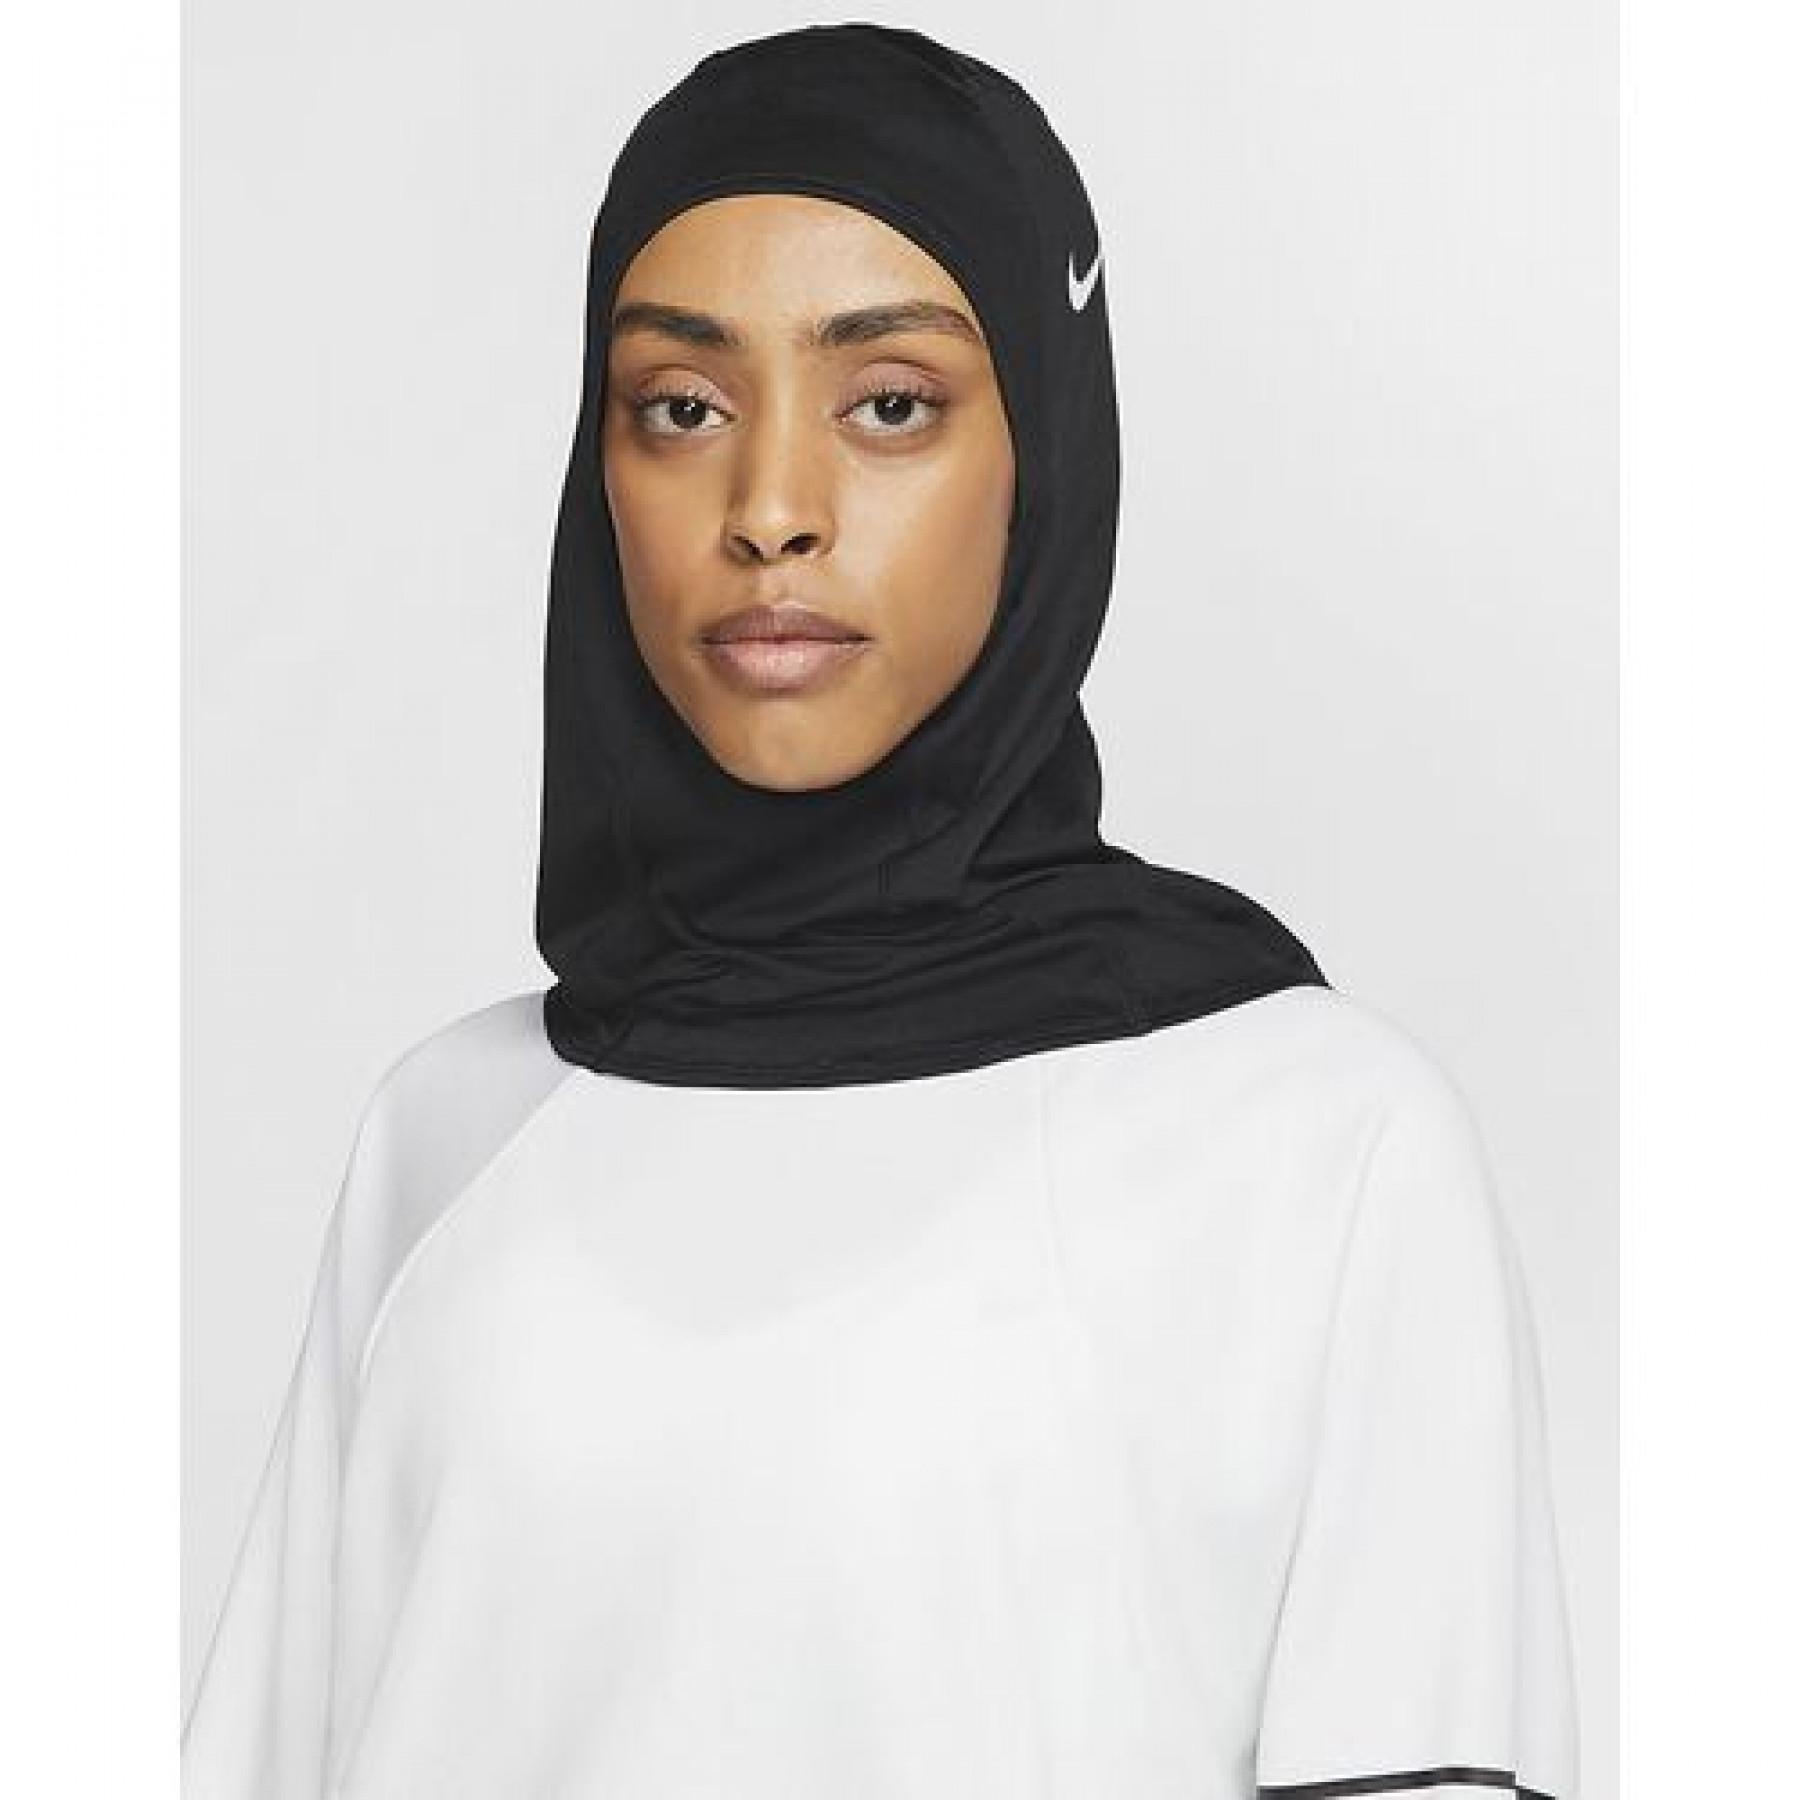 Hijab woman Nike pro 2.0